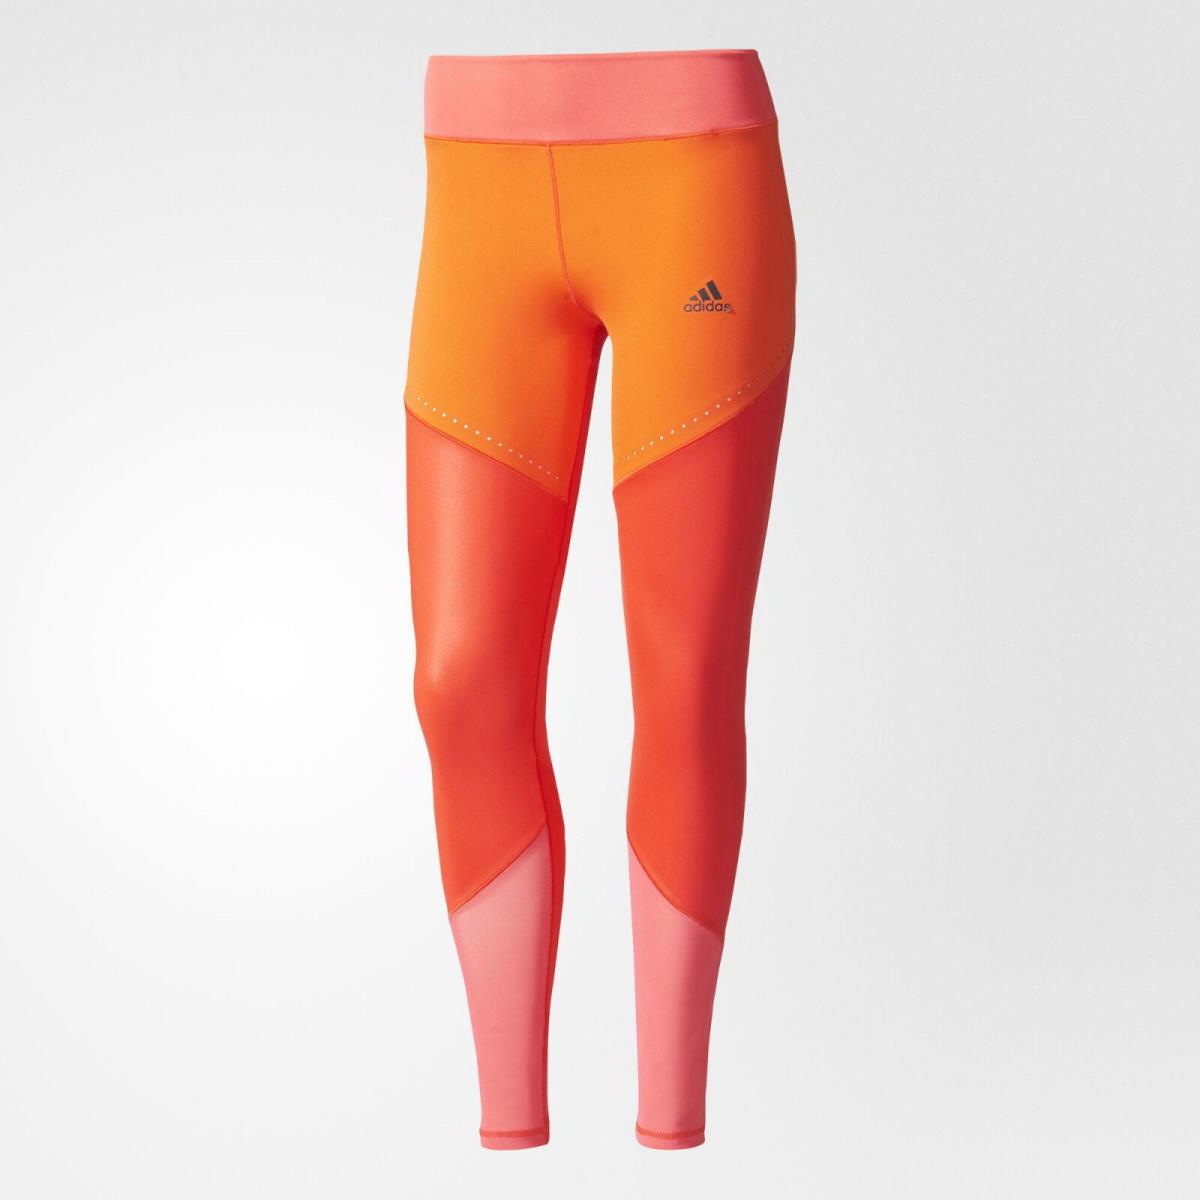 Womens Leggings Adidas XL Climalight Run Red Orange Pink Coral Pants Wow